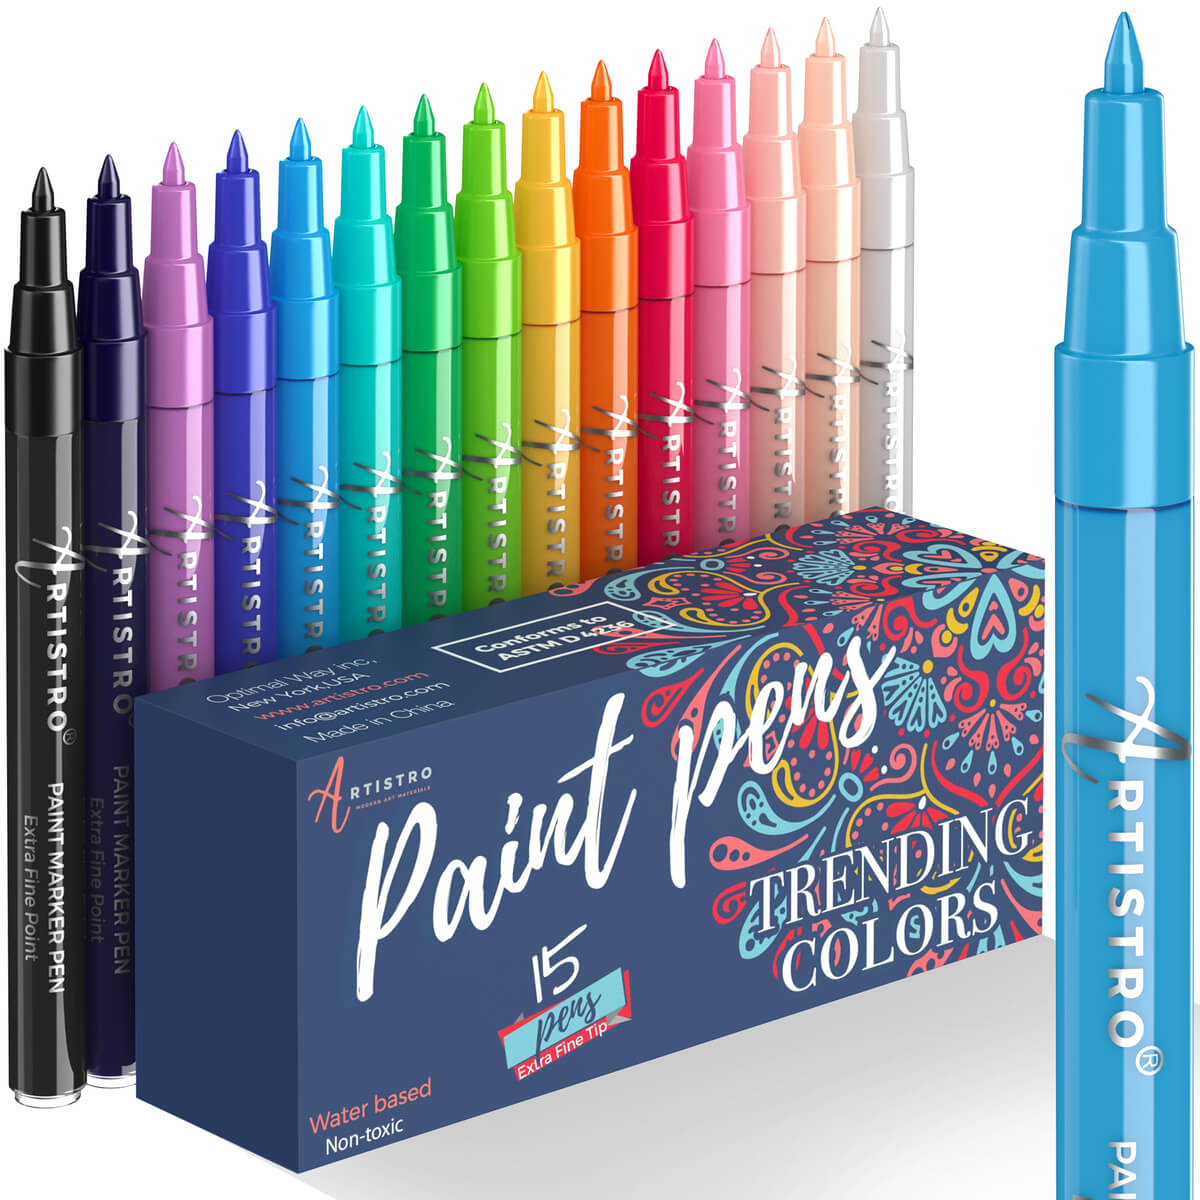 Acrylic Paint Markers Pens – 30 Acrylic Paint Pens Medium Tip 2mm